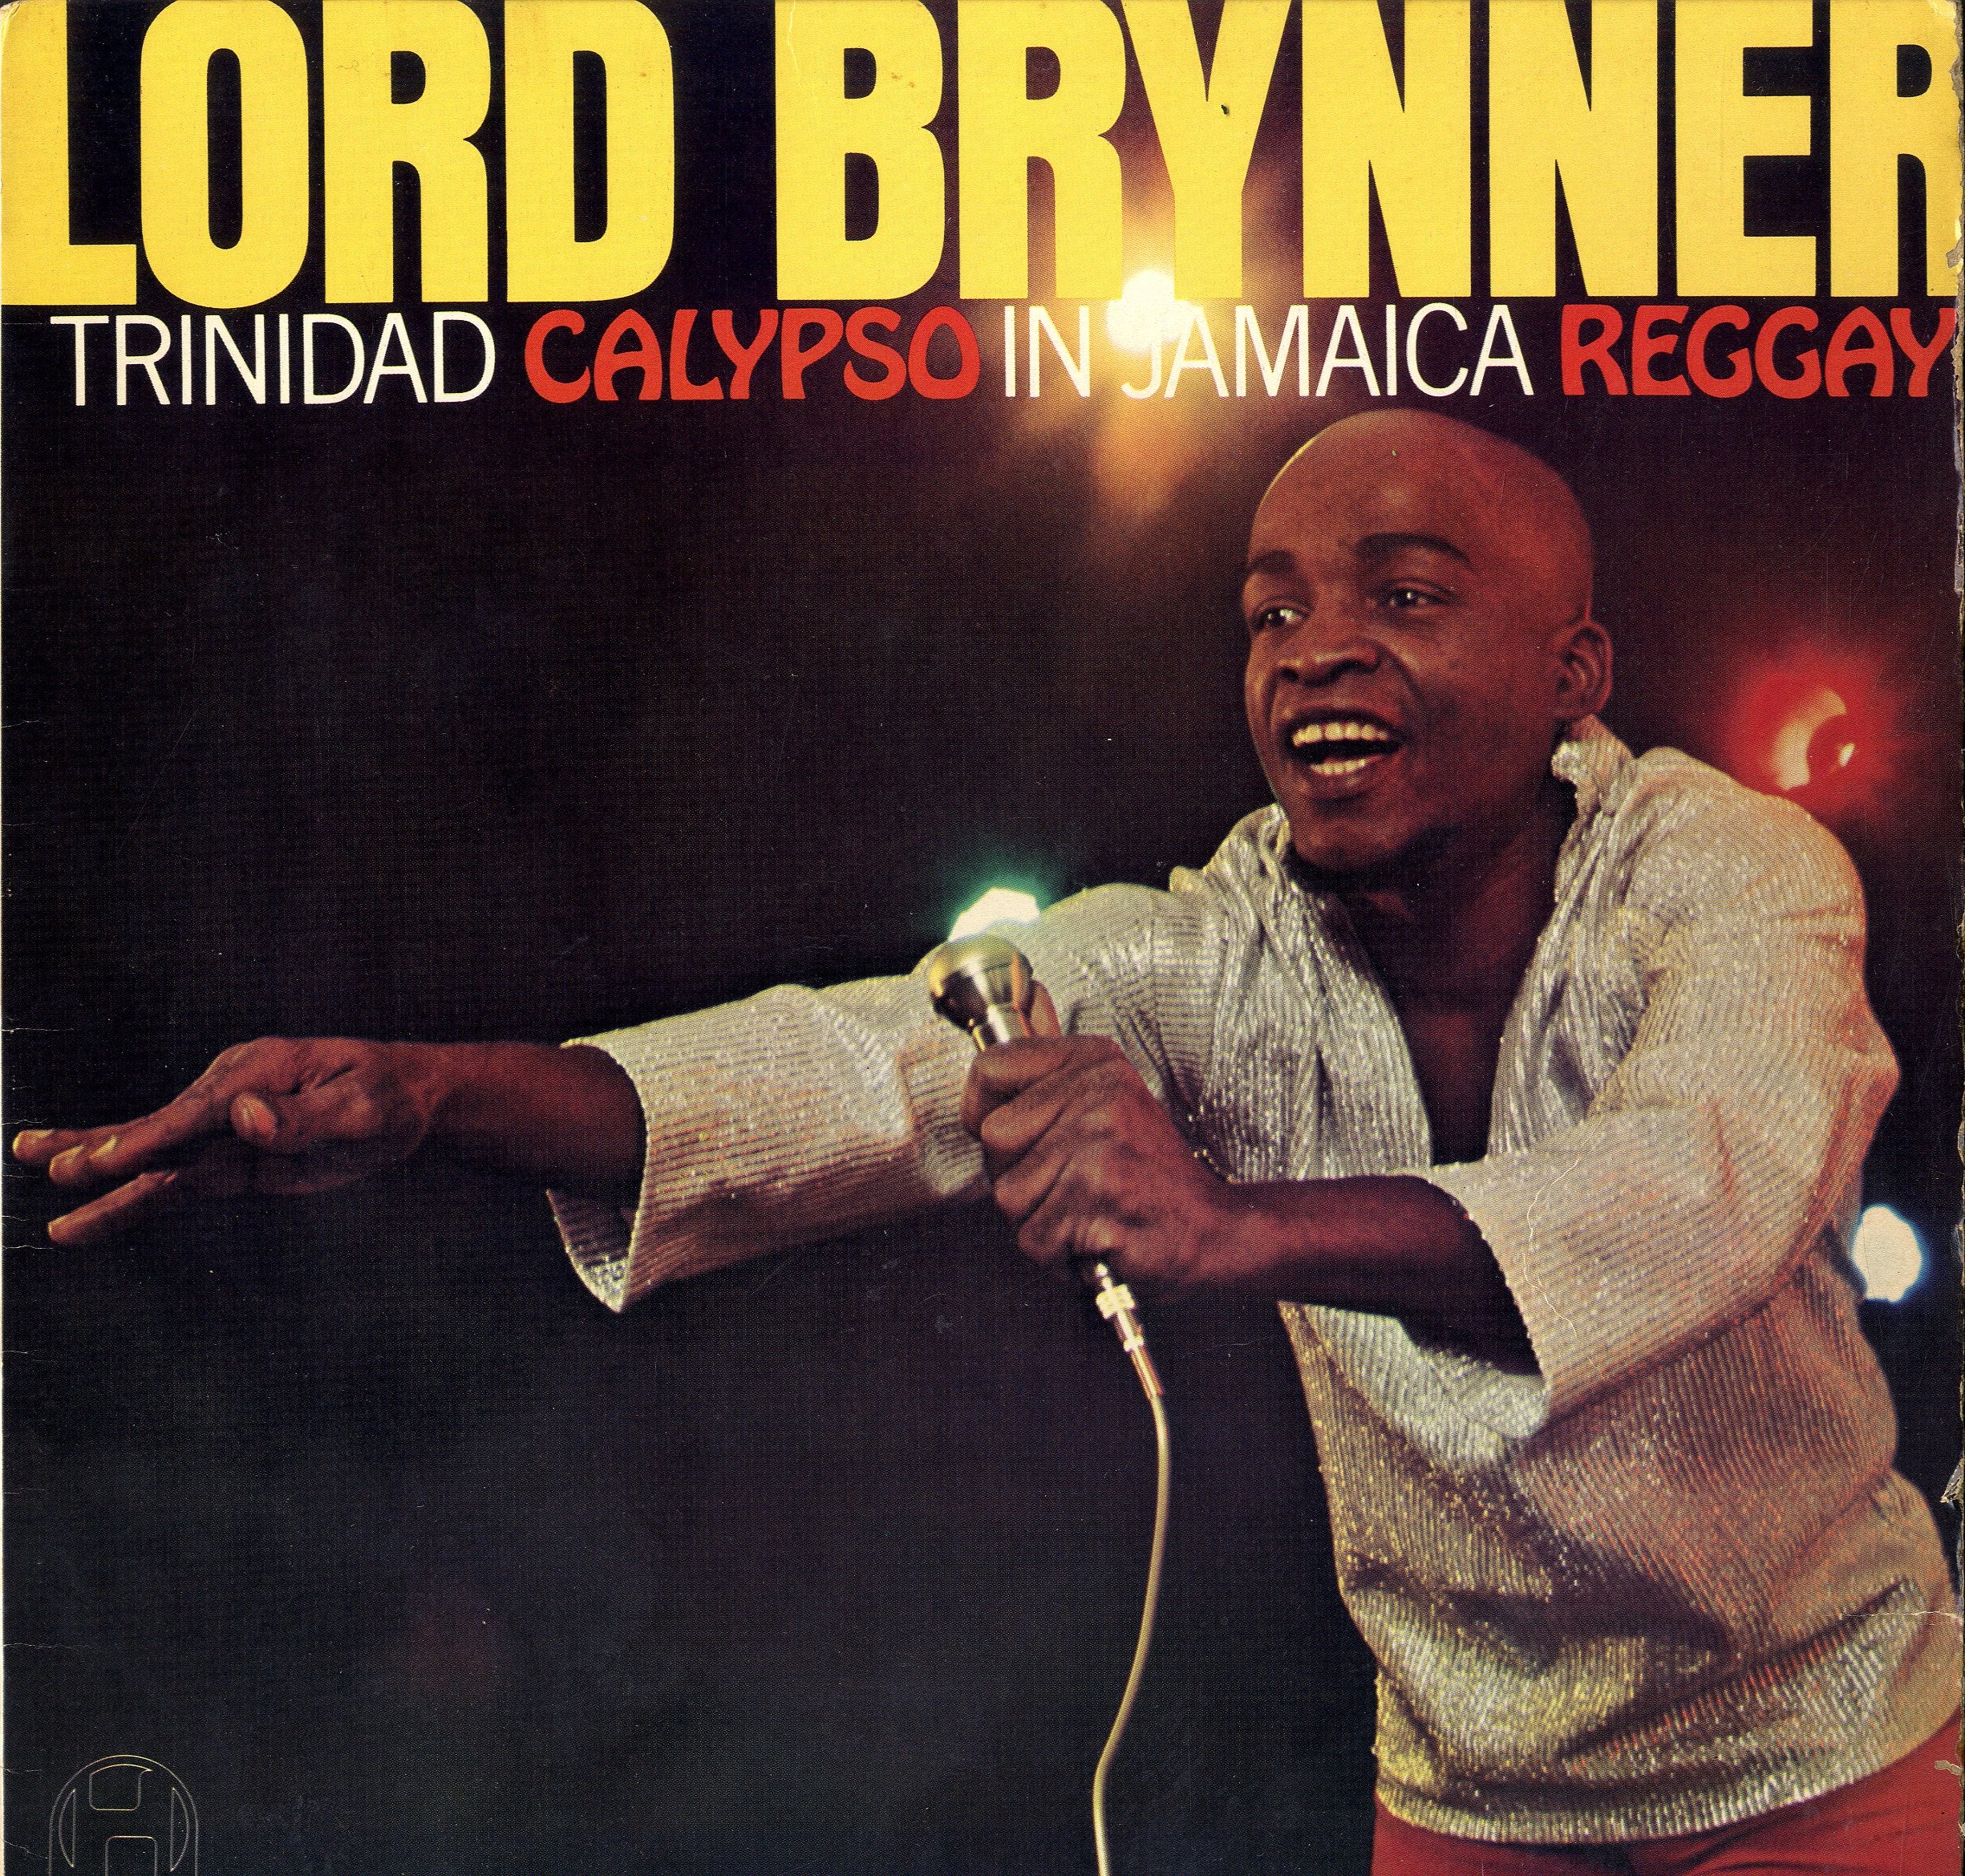 LORD BRYNNER [Trinidad Calypso In Jamaica Reggay]